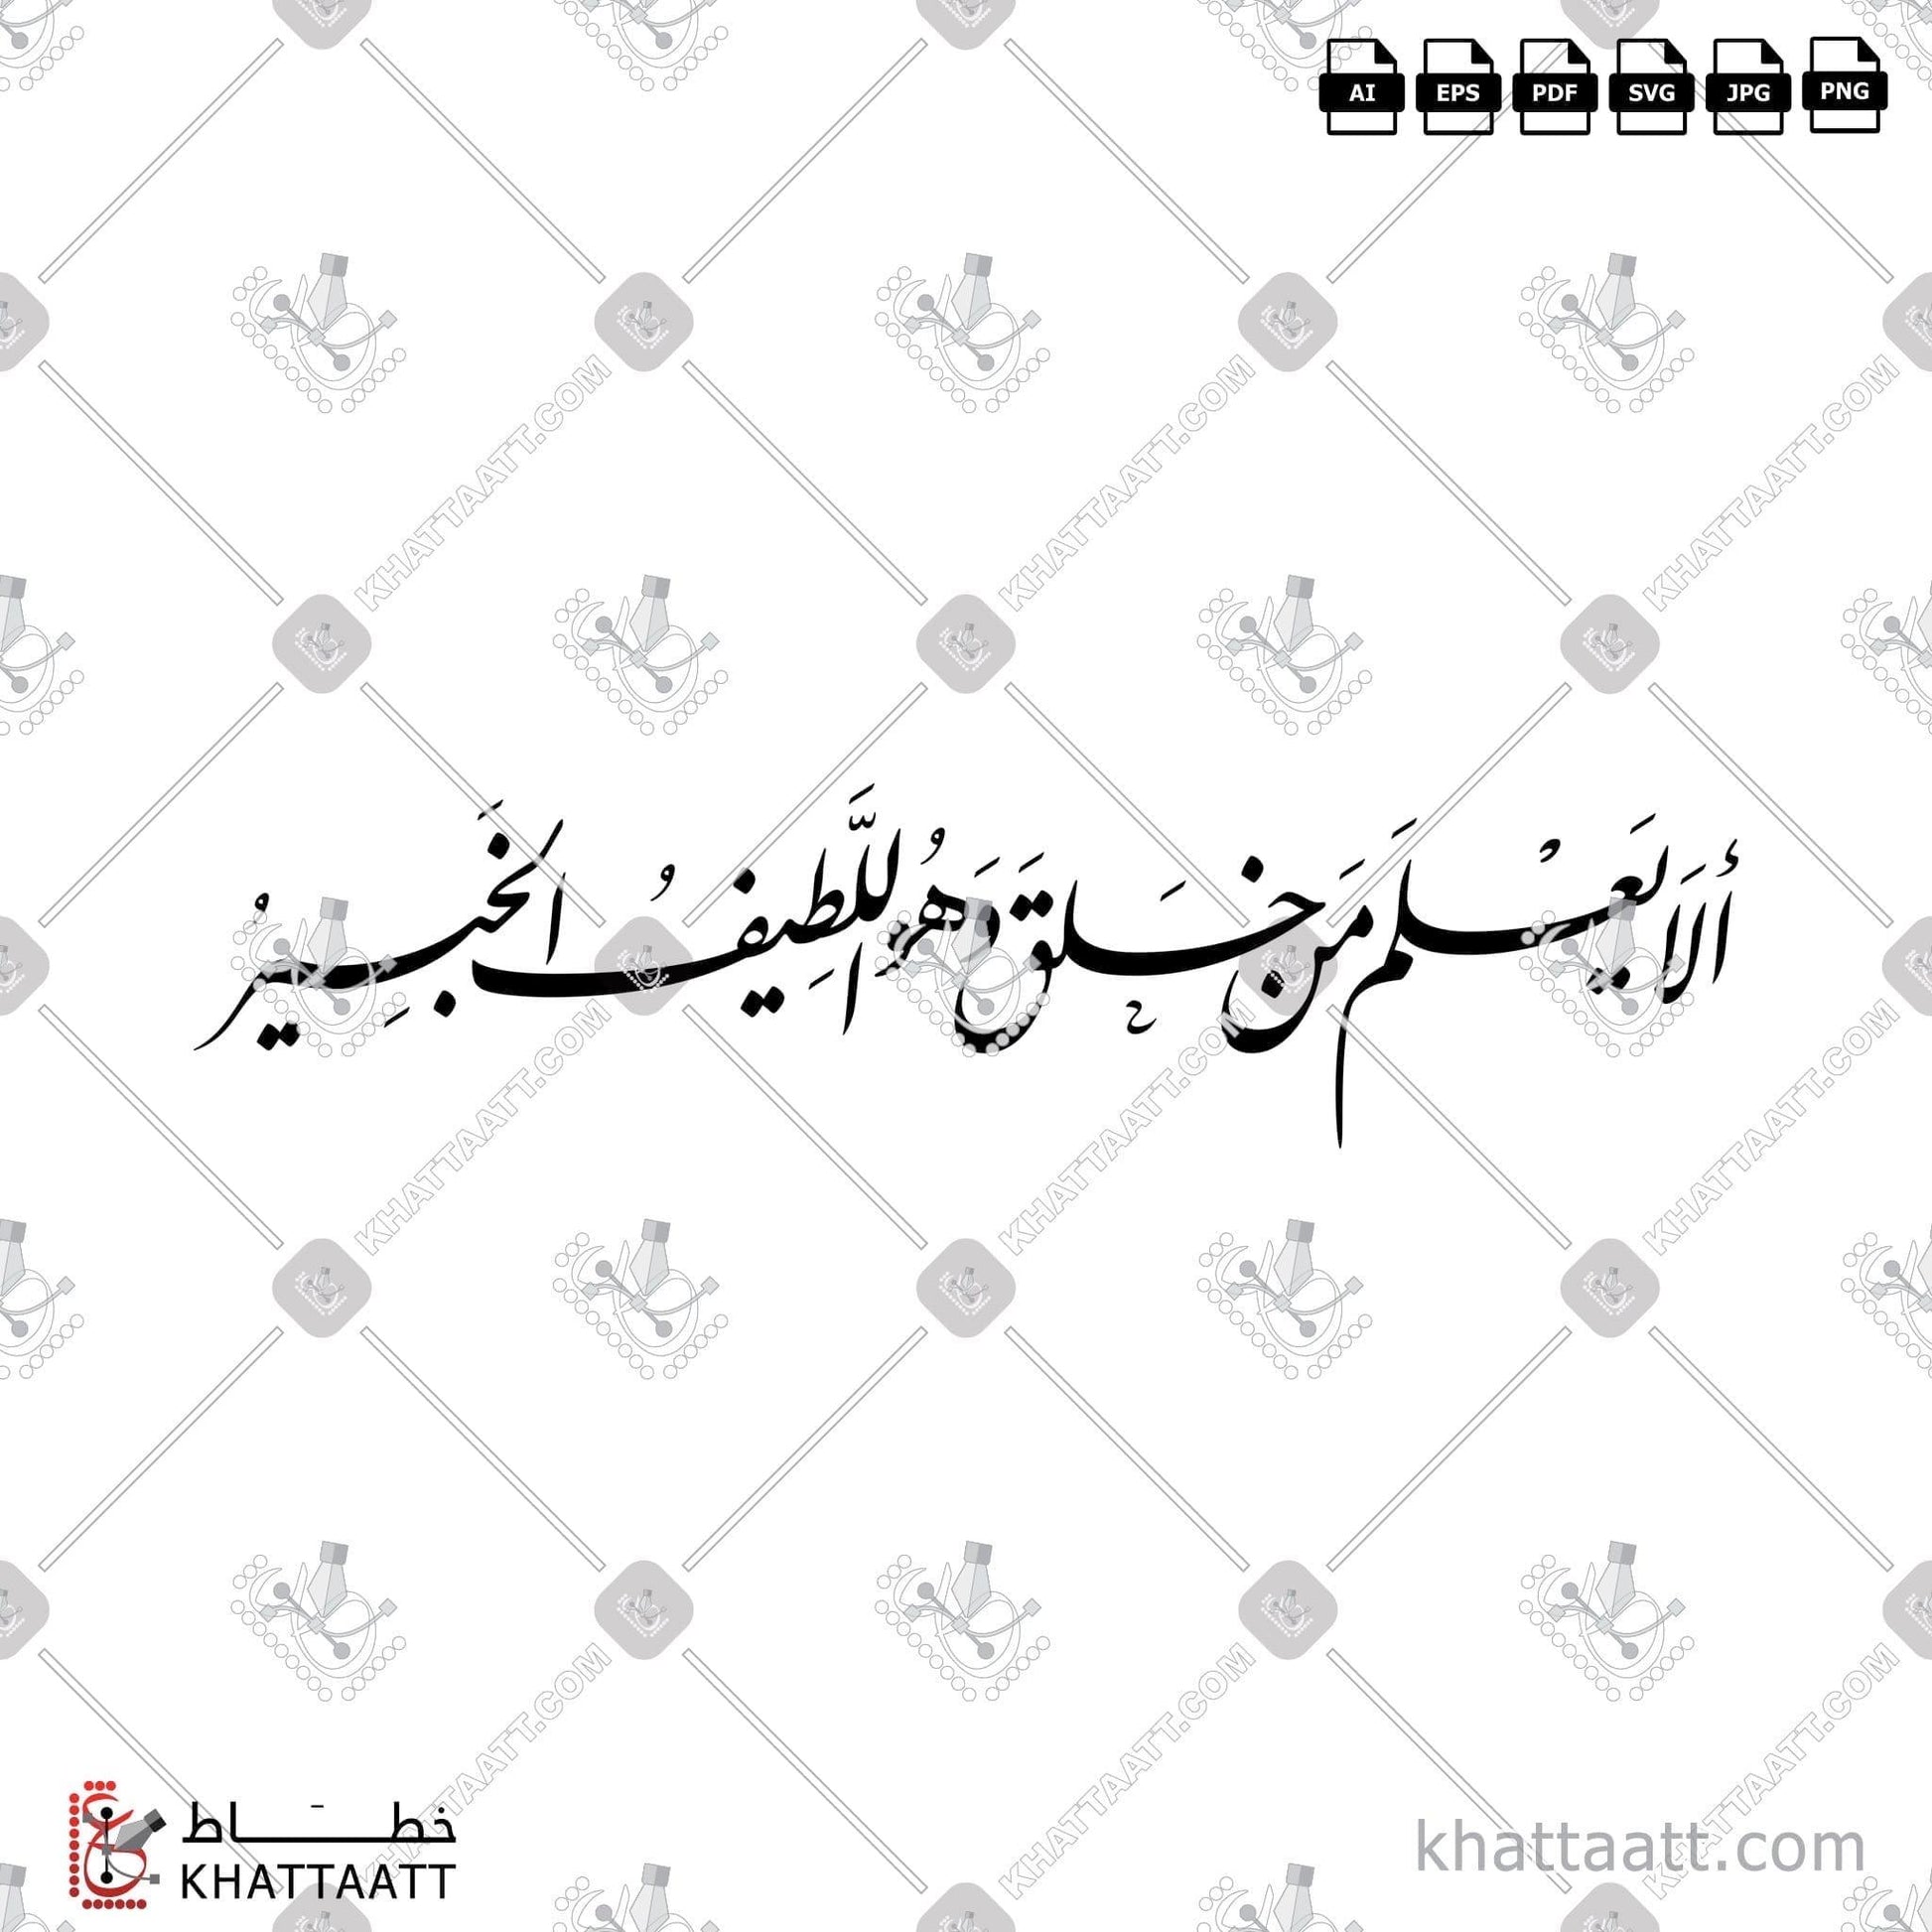 Download Arabic Calligraphy of ألا يعلم من خلق وهو اللطيف الخبير in Farsi - الخط الفارسي in vector and .png